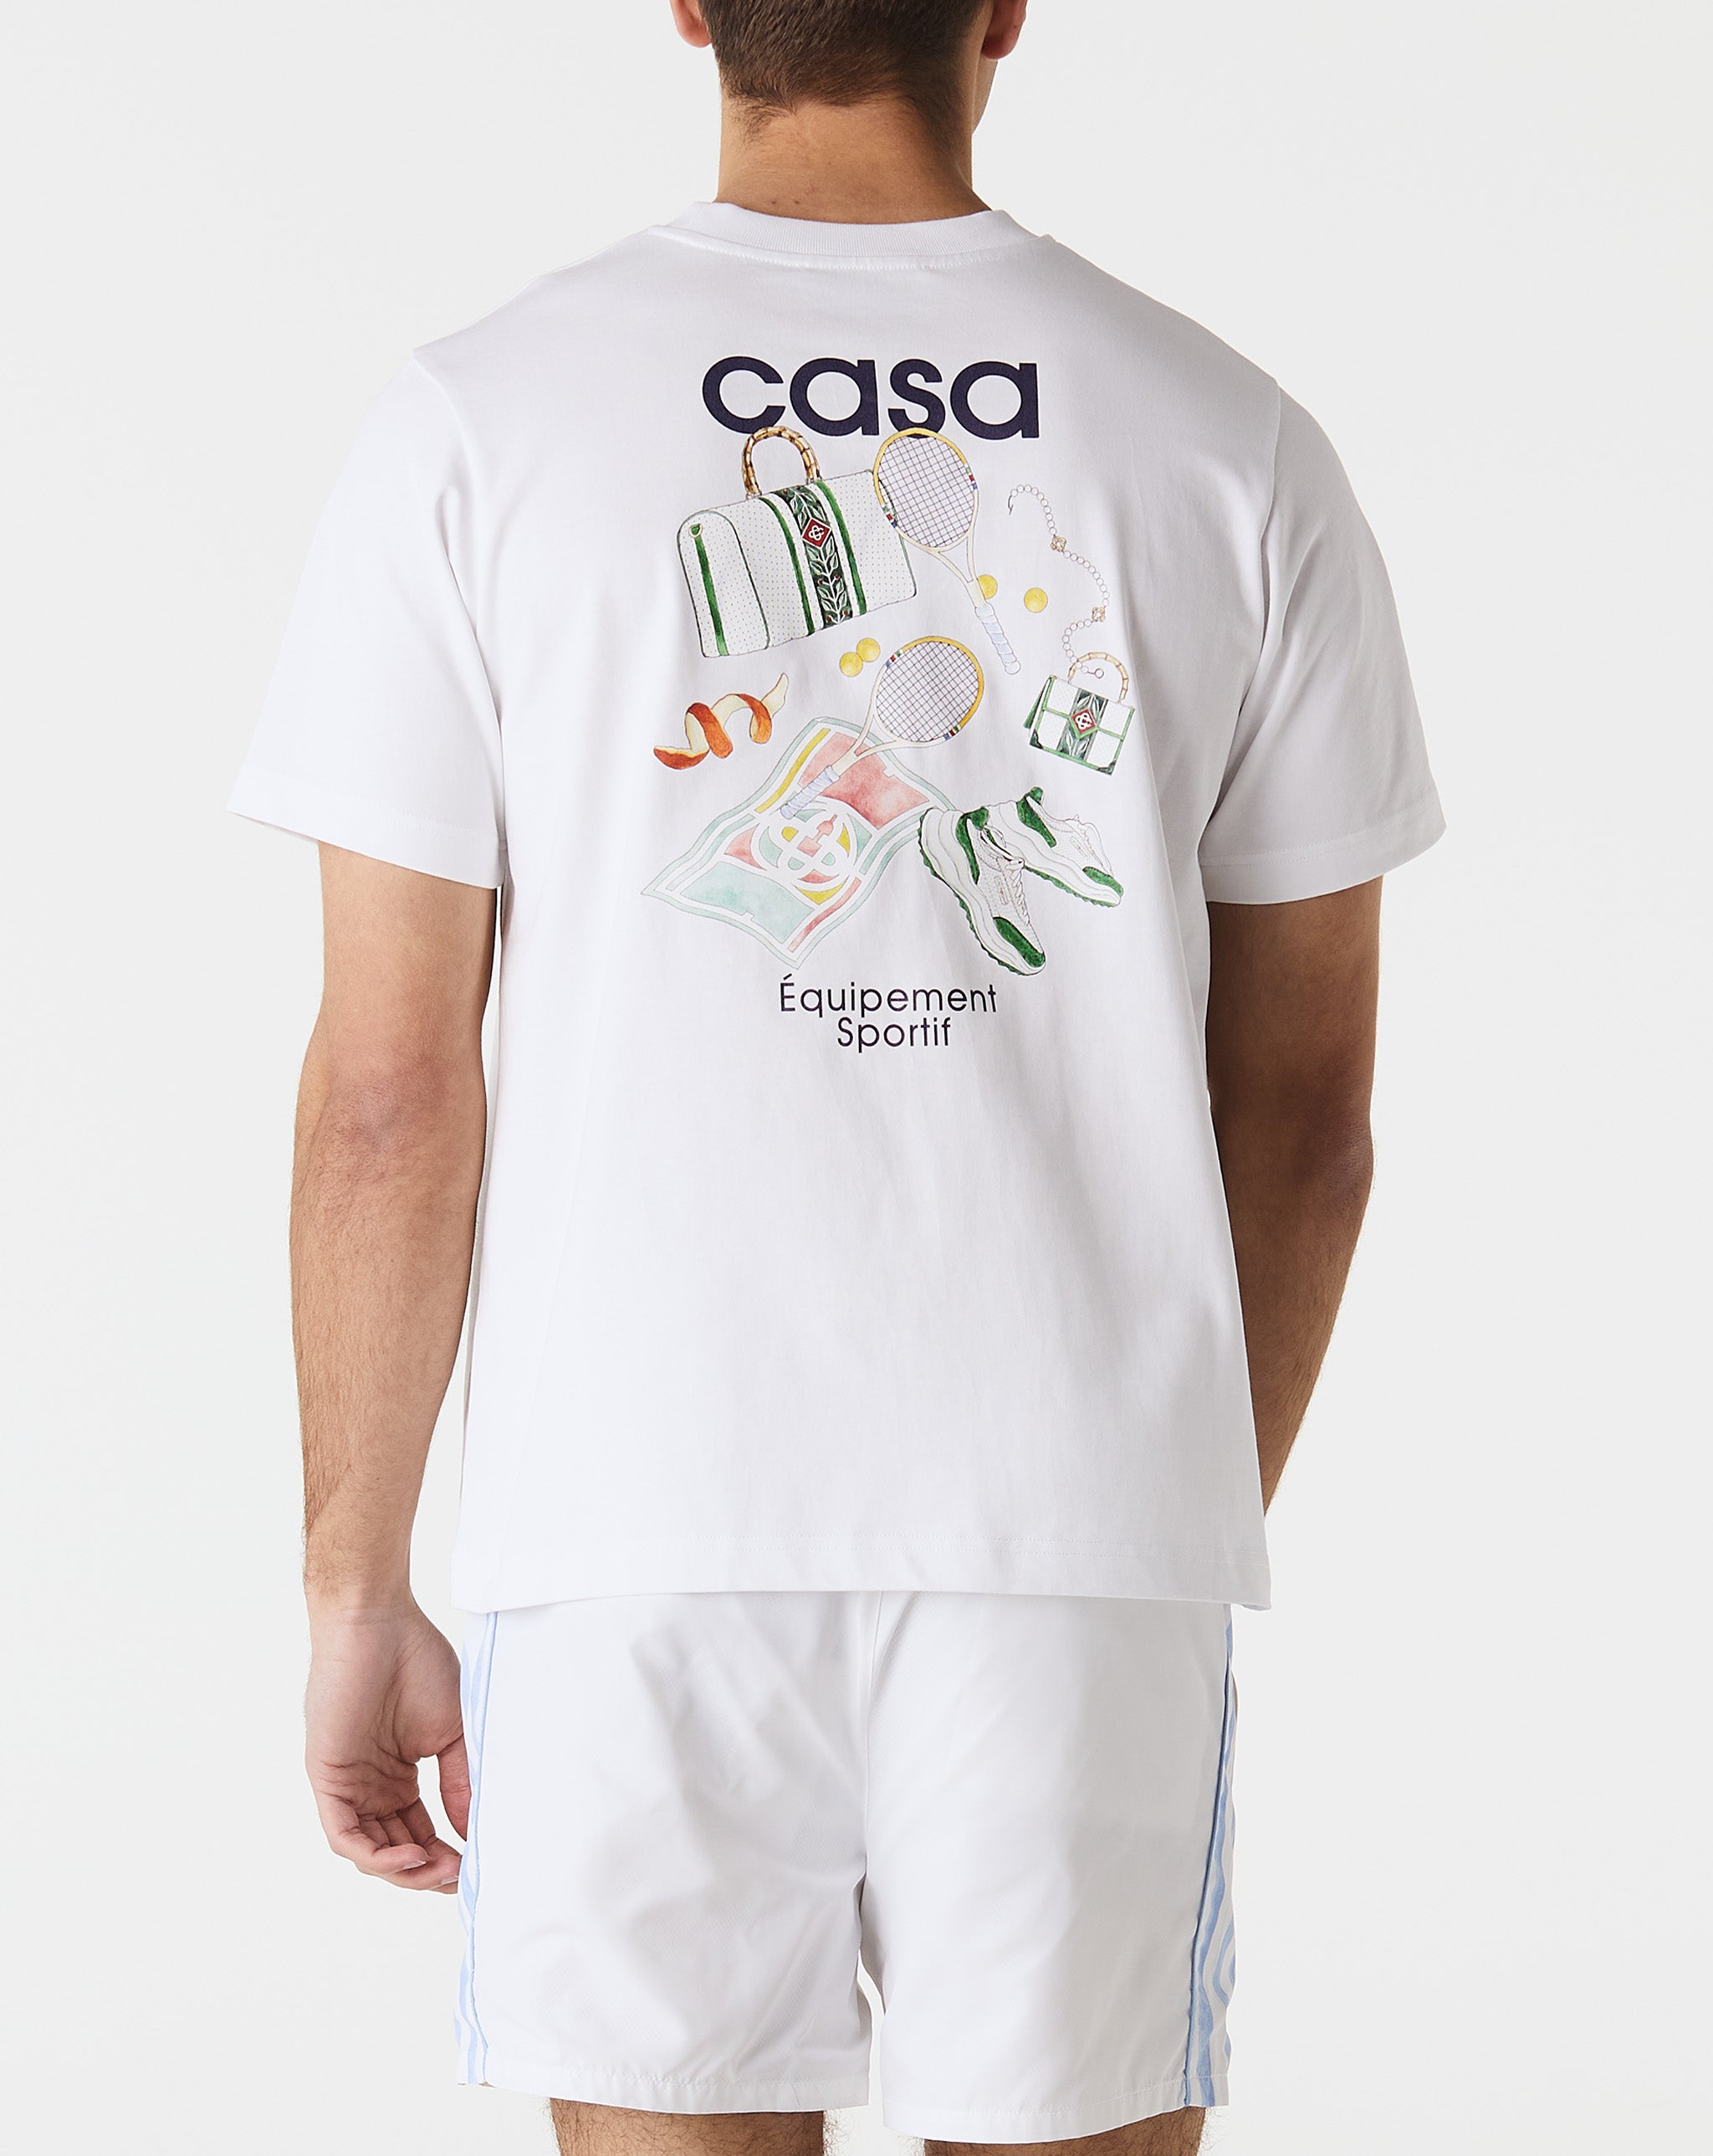 Casablanca Equipement Sportif Printed T-Shirt  - XHIBITION